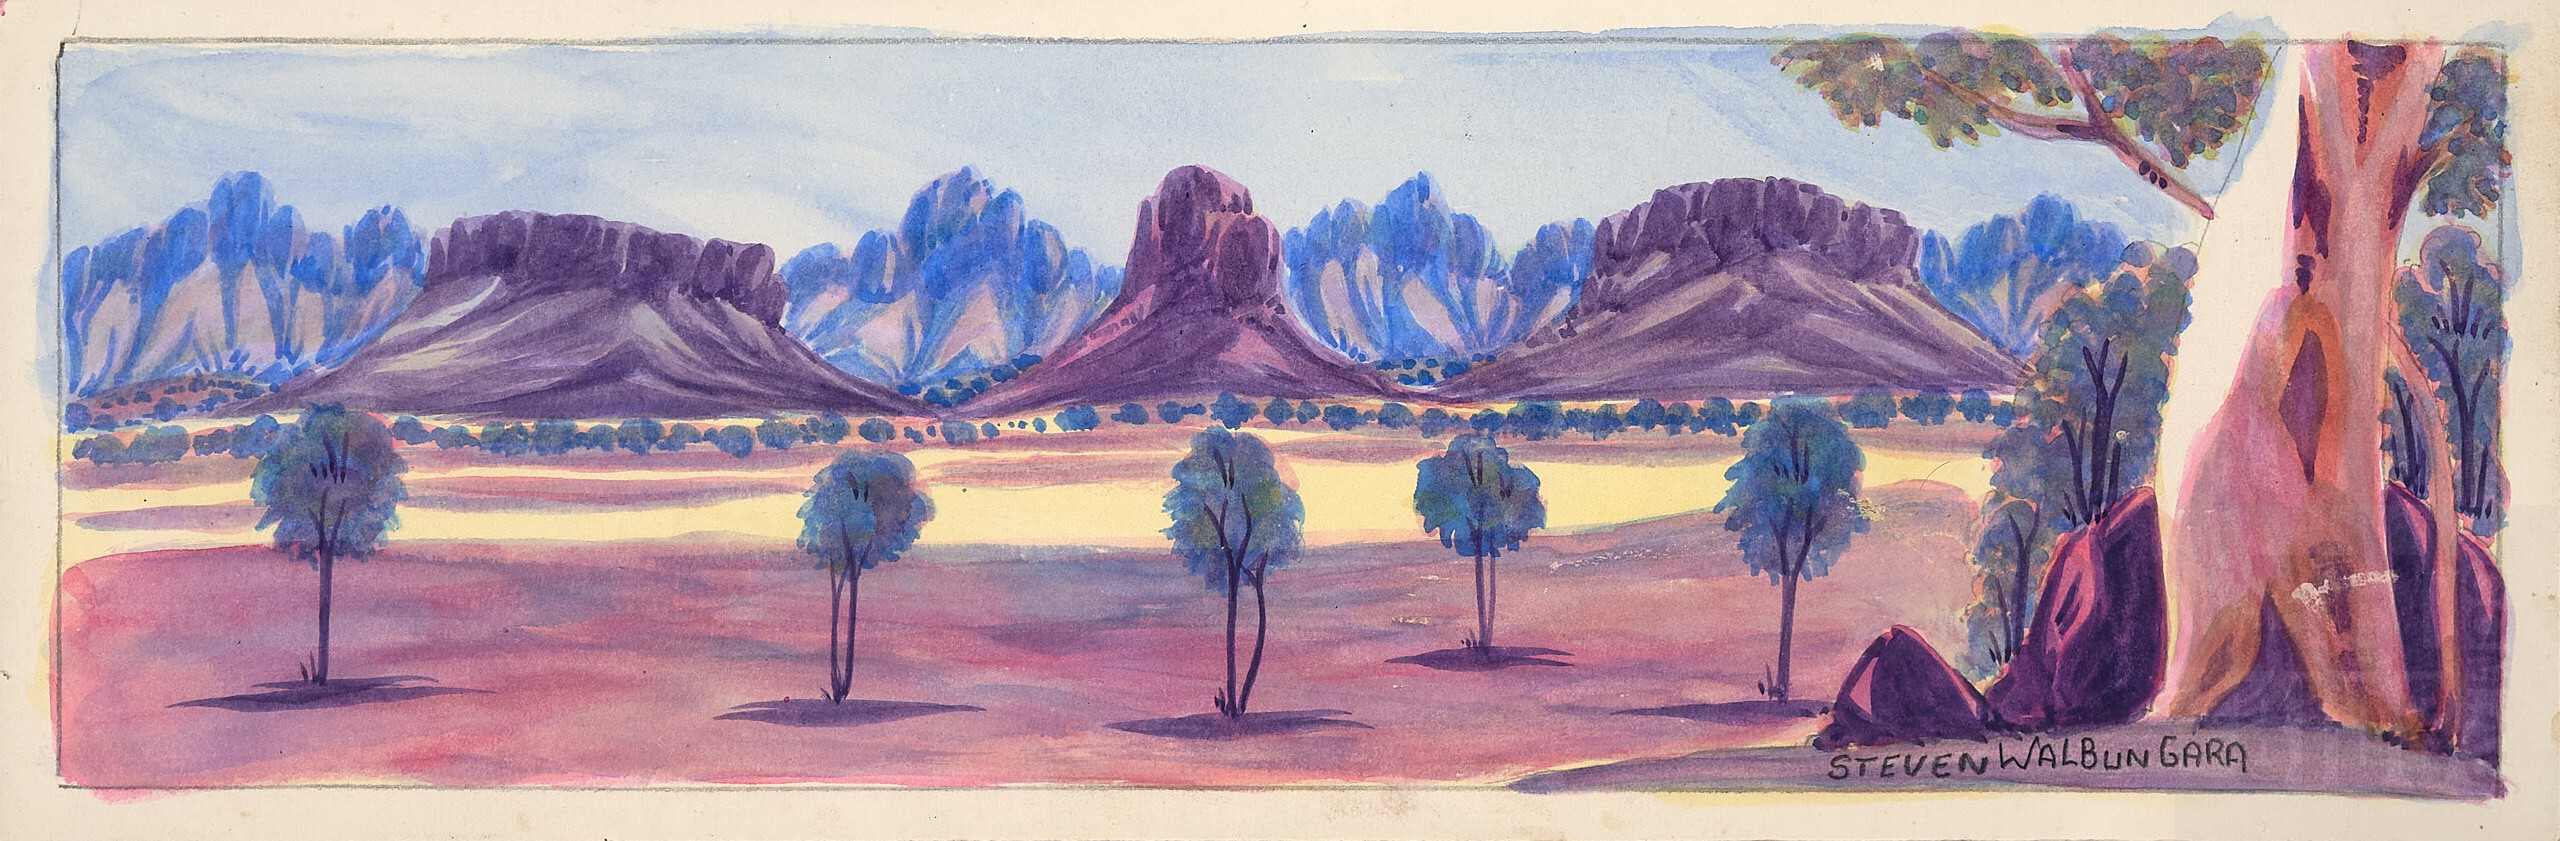 'Steven Walbungarra (born 1959), Central Australian Landscape, Watercolour on Crescent Board, 11 x 36.5 cm'